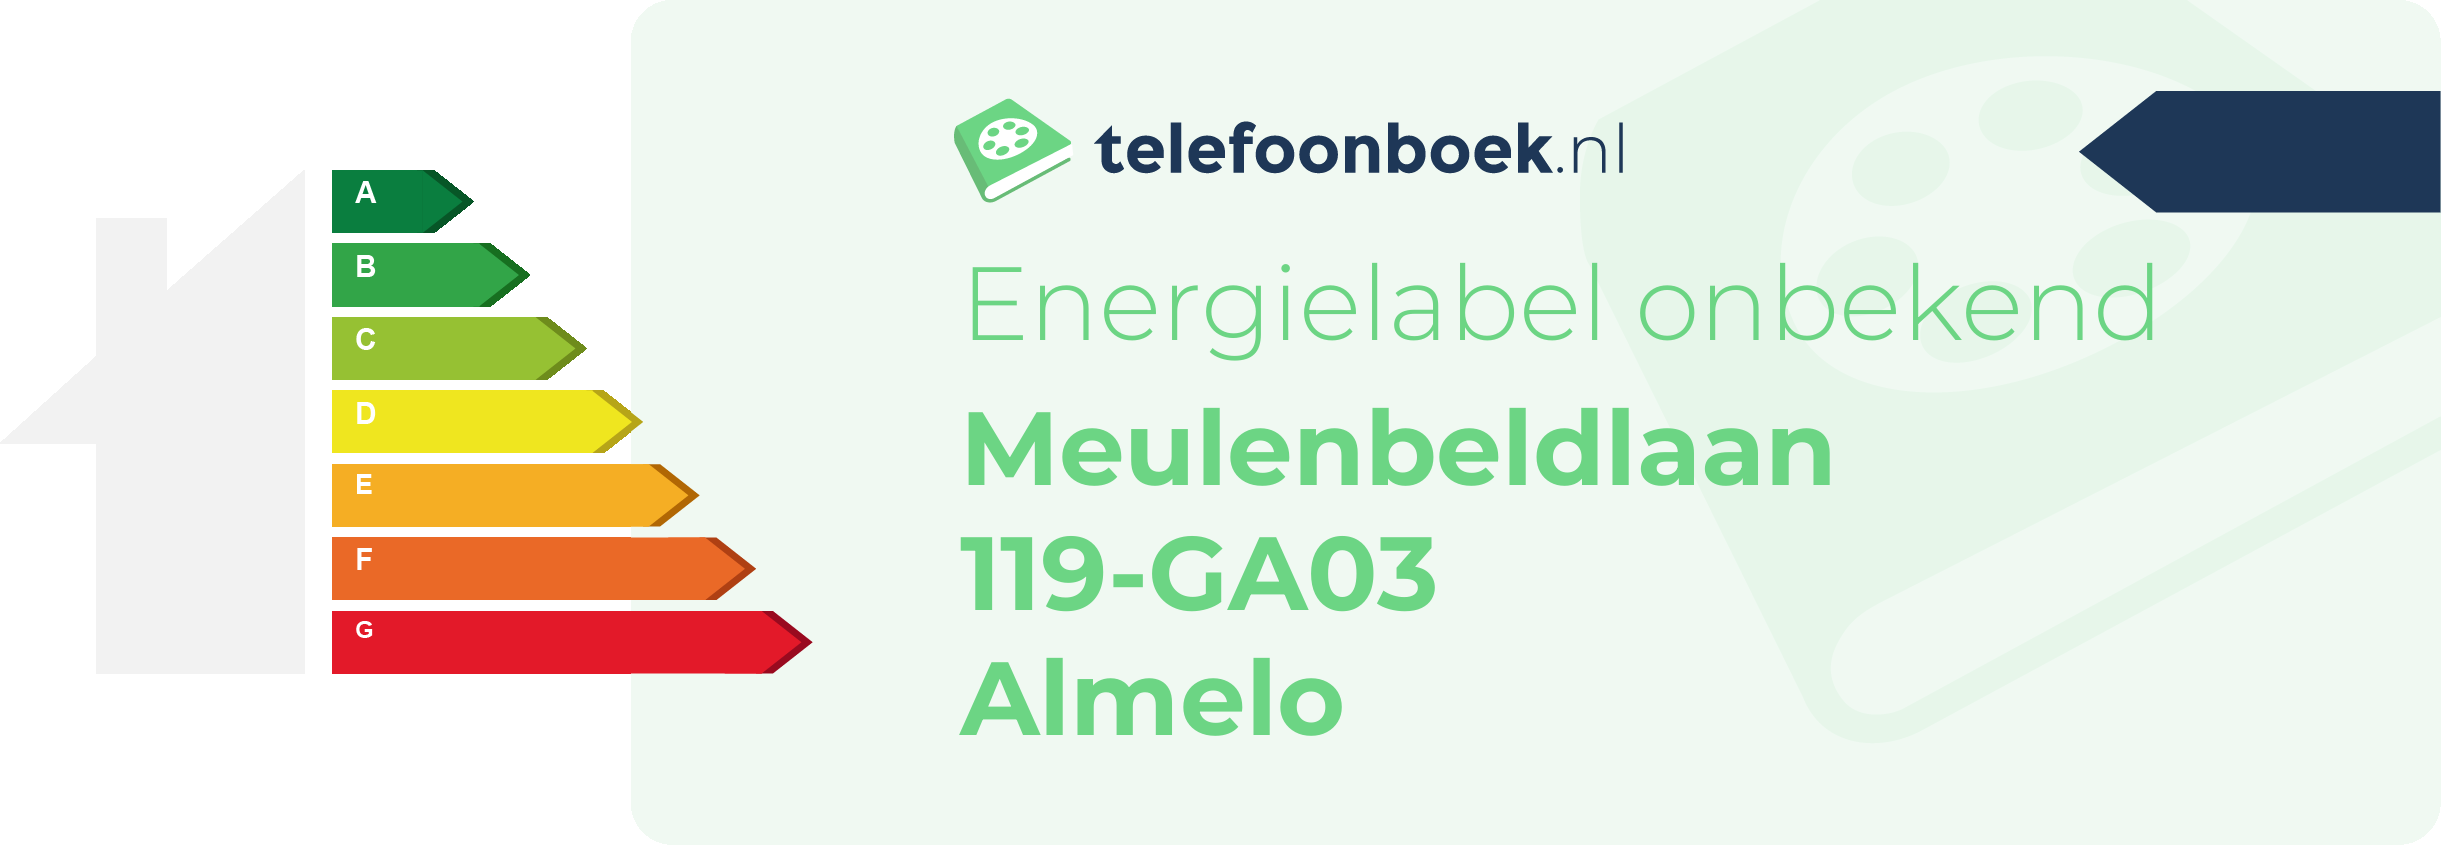 Energielabel Meulenbeldlaan 119-GA03 Almelo